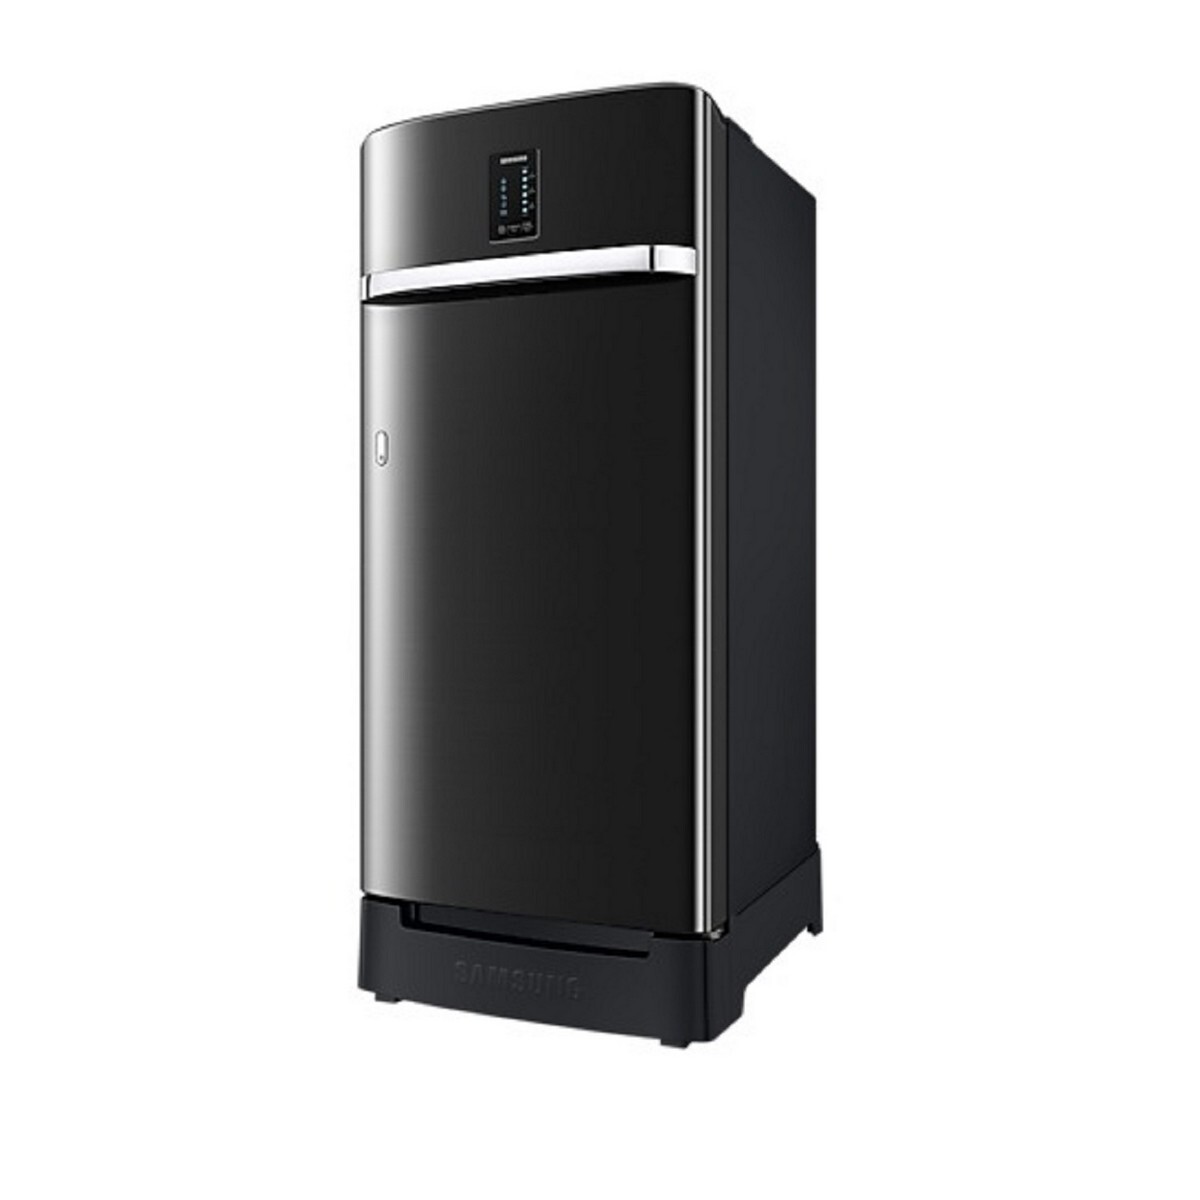 Samsung Refrigerator RR21C2F24BX 189L